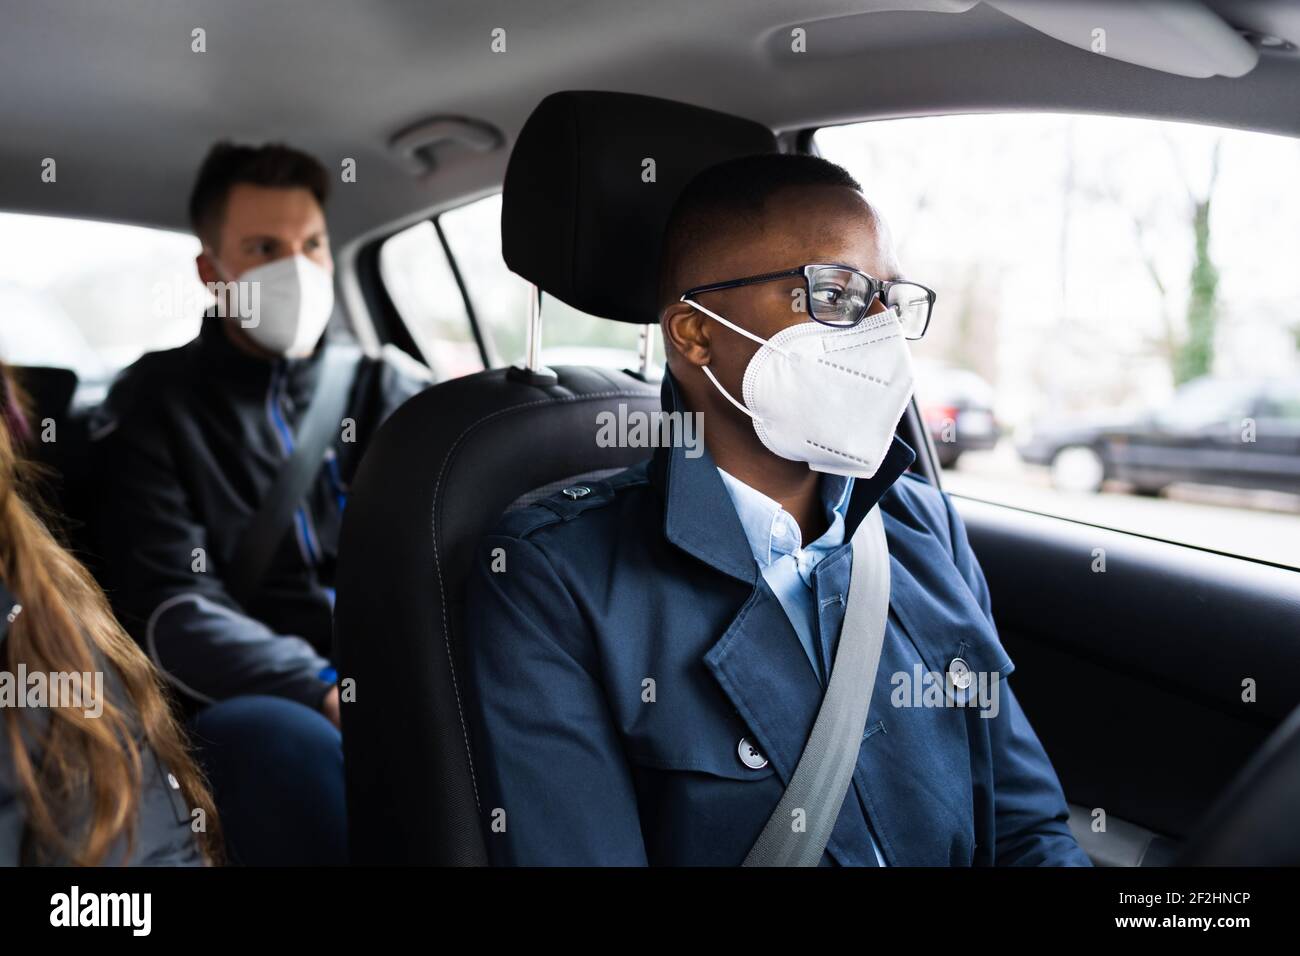 Carpool Car Ride Share Service In Gesichtsmaske Stockfoto